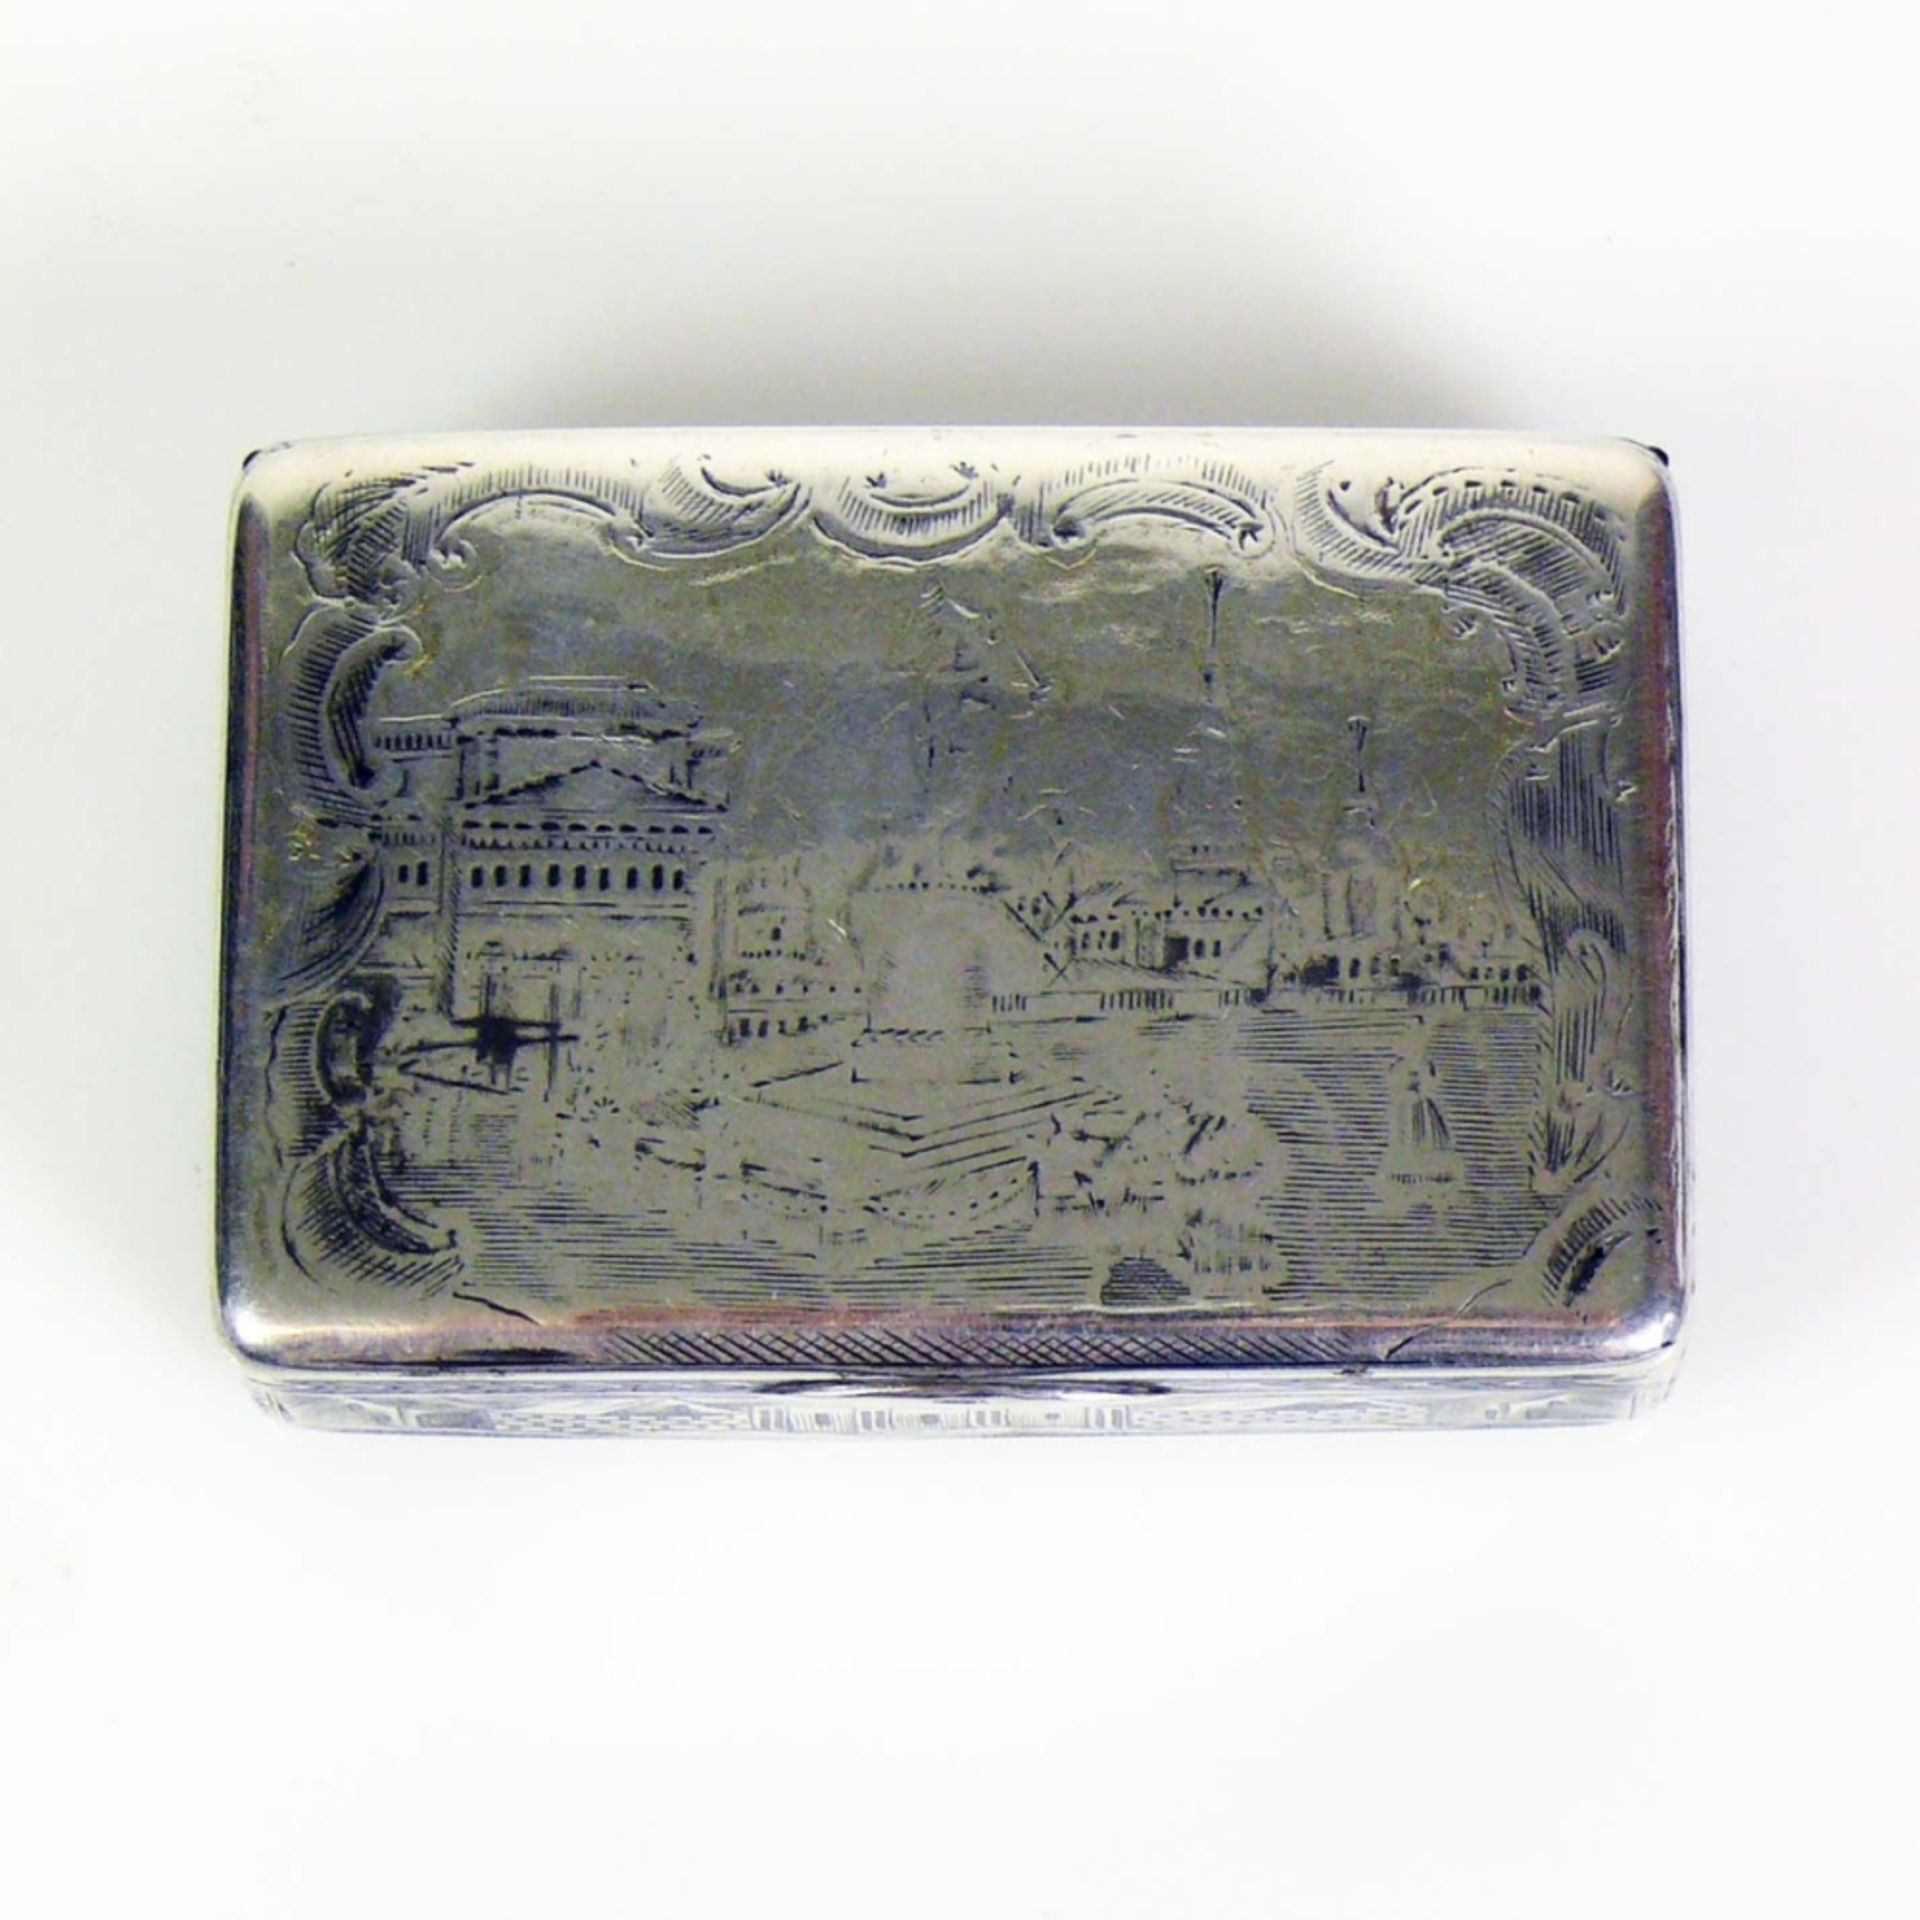 Deckeldose rechteckige Form; Silber; - Image 5 of 6